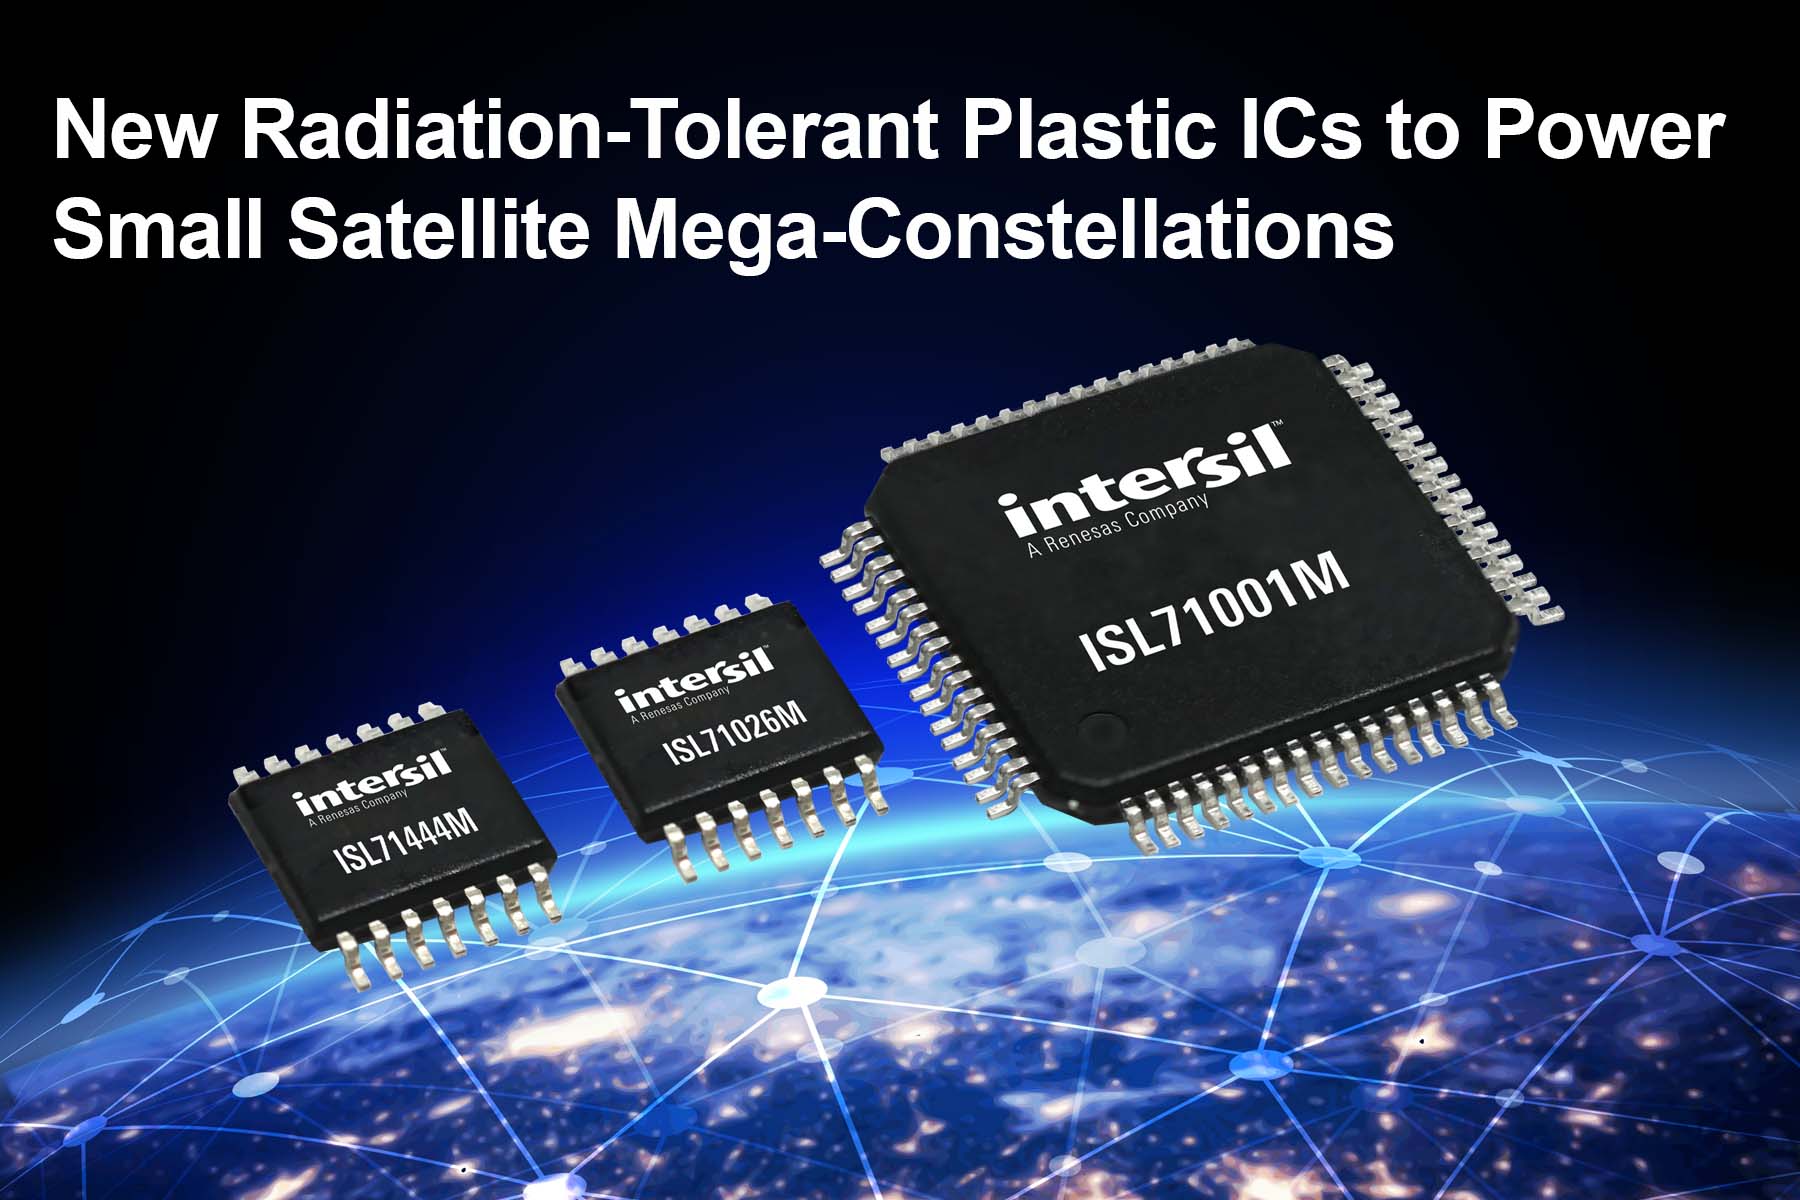 Radiation-Tolerant Plastic ICs Power Small Satellite Mega-Constellations